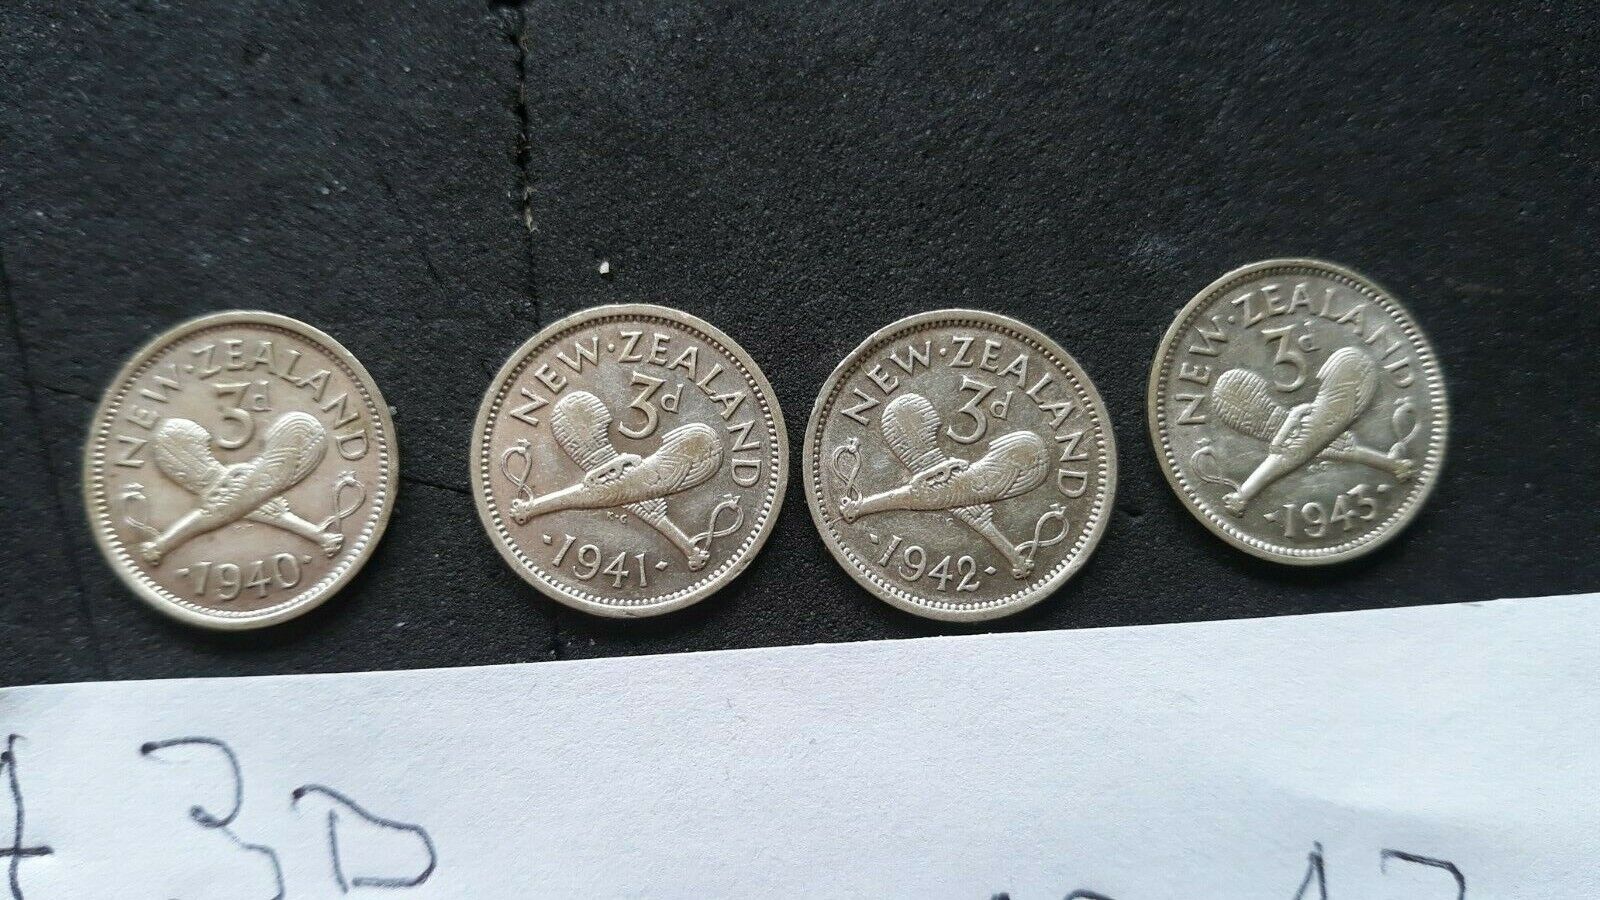 new Zealand coins 3ds see photos x4 1940 41 42 43  $30  post $2  Без бренда - фотография #2